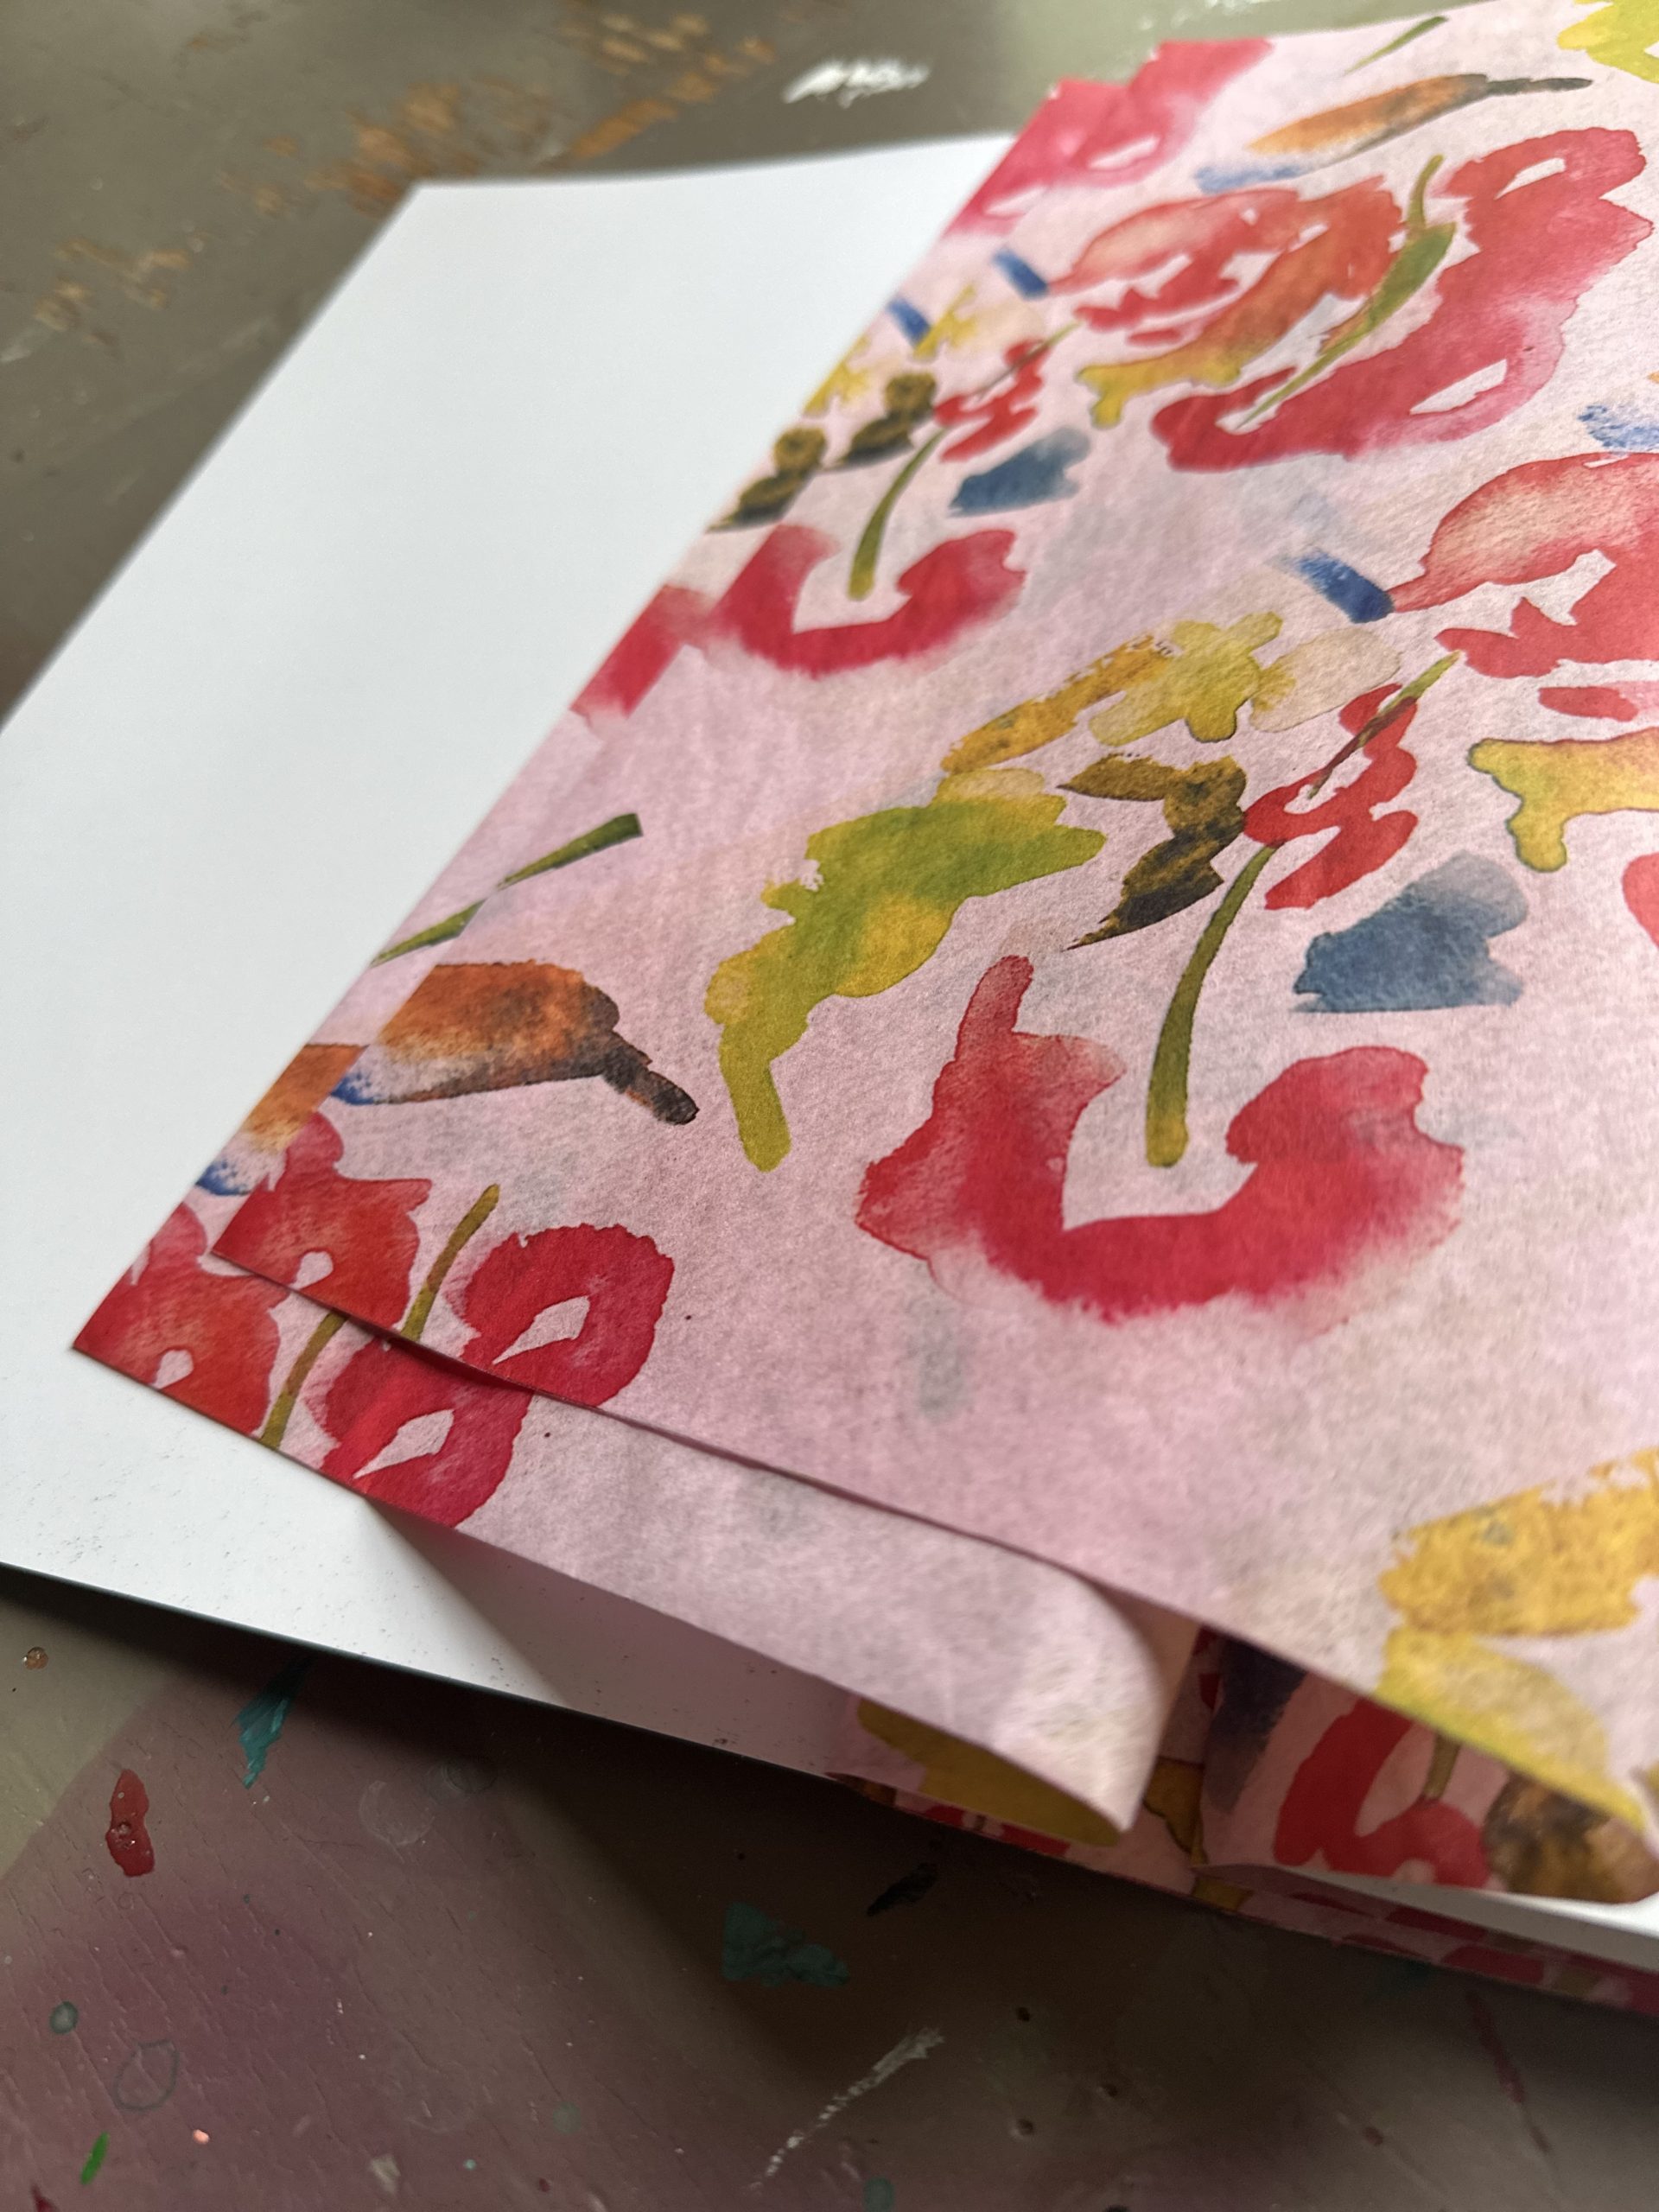 Custom Tissue Paper - Print Designs on Tissue Paper